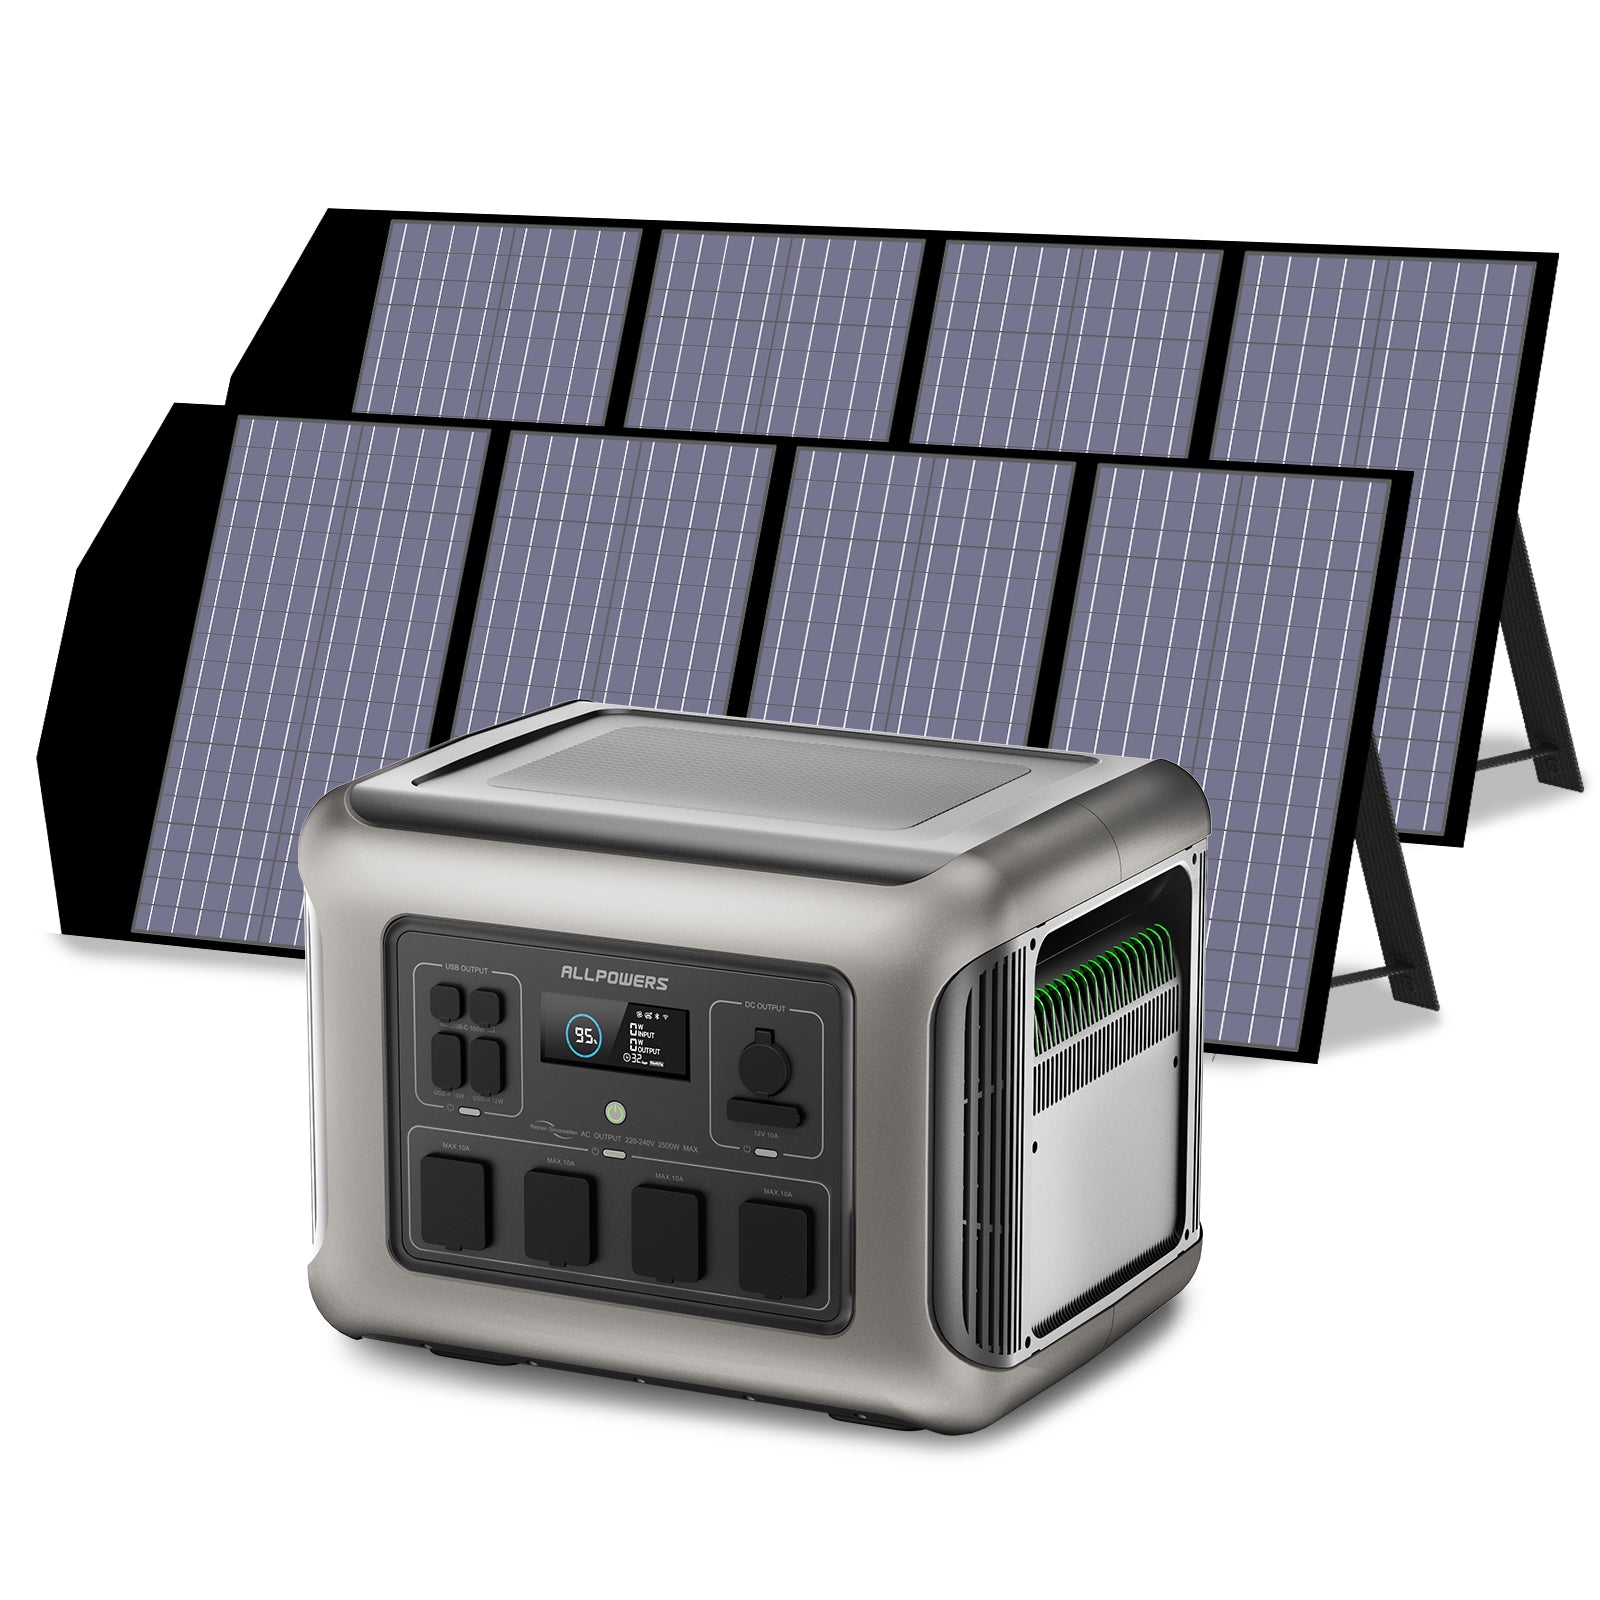 ALLPOWERS Solar Generator Kit 2500W (R2500 + SP029 140W Solar Panel)